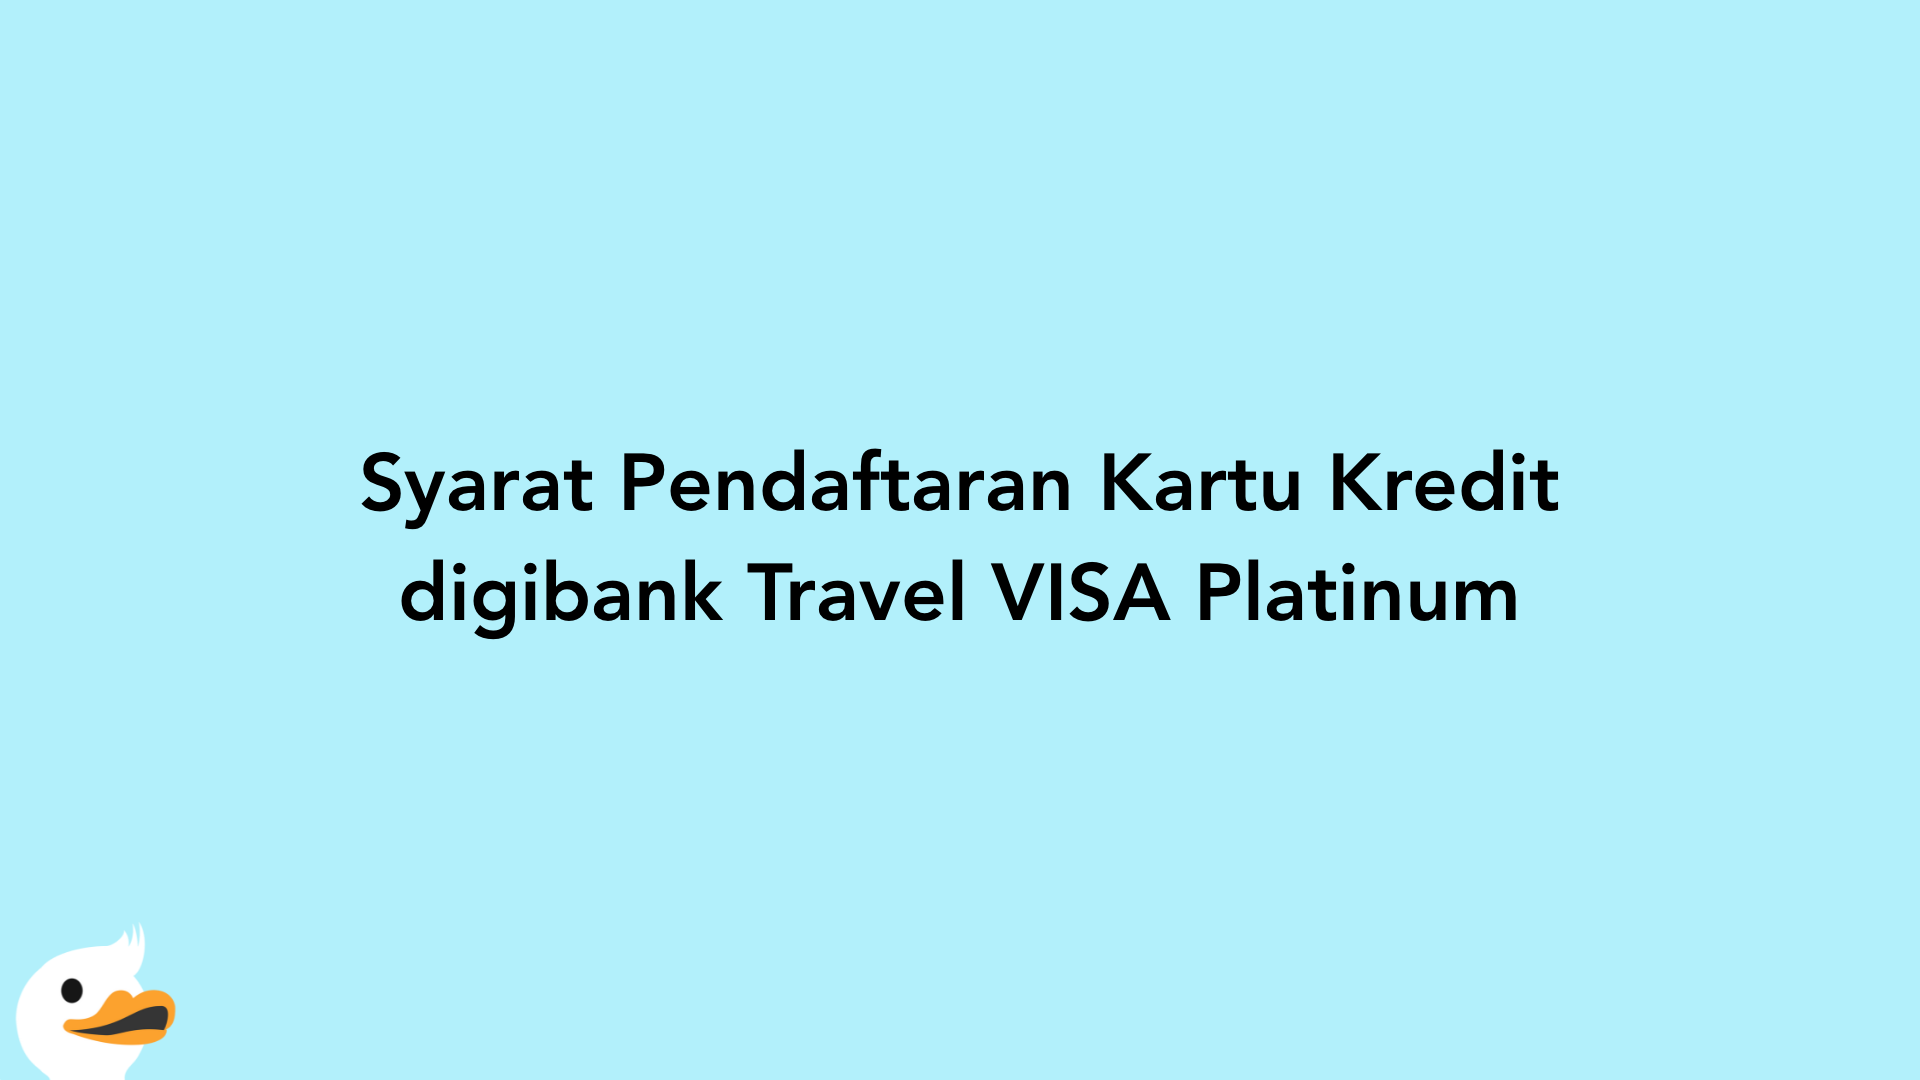 Syarat Pendaftaran Kartu Kredit digibank Travel VISA Platinum